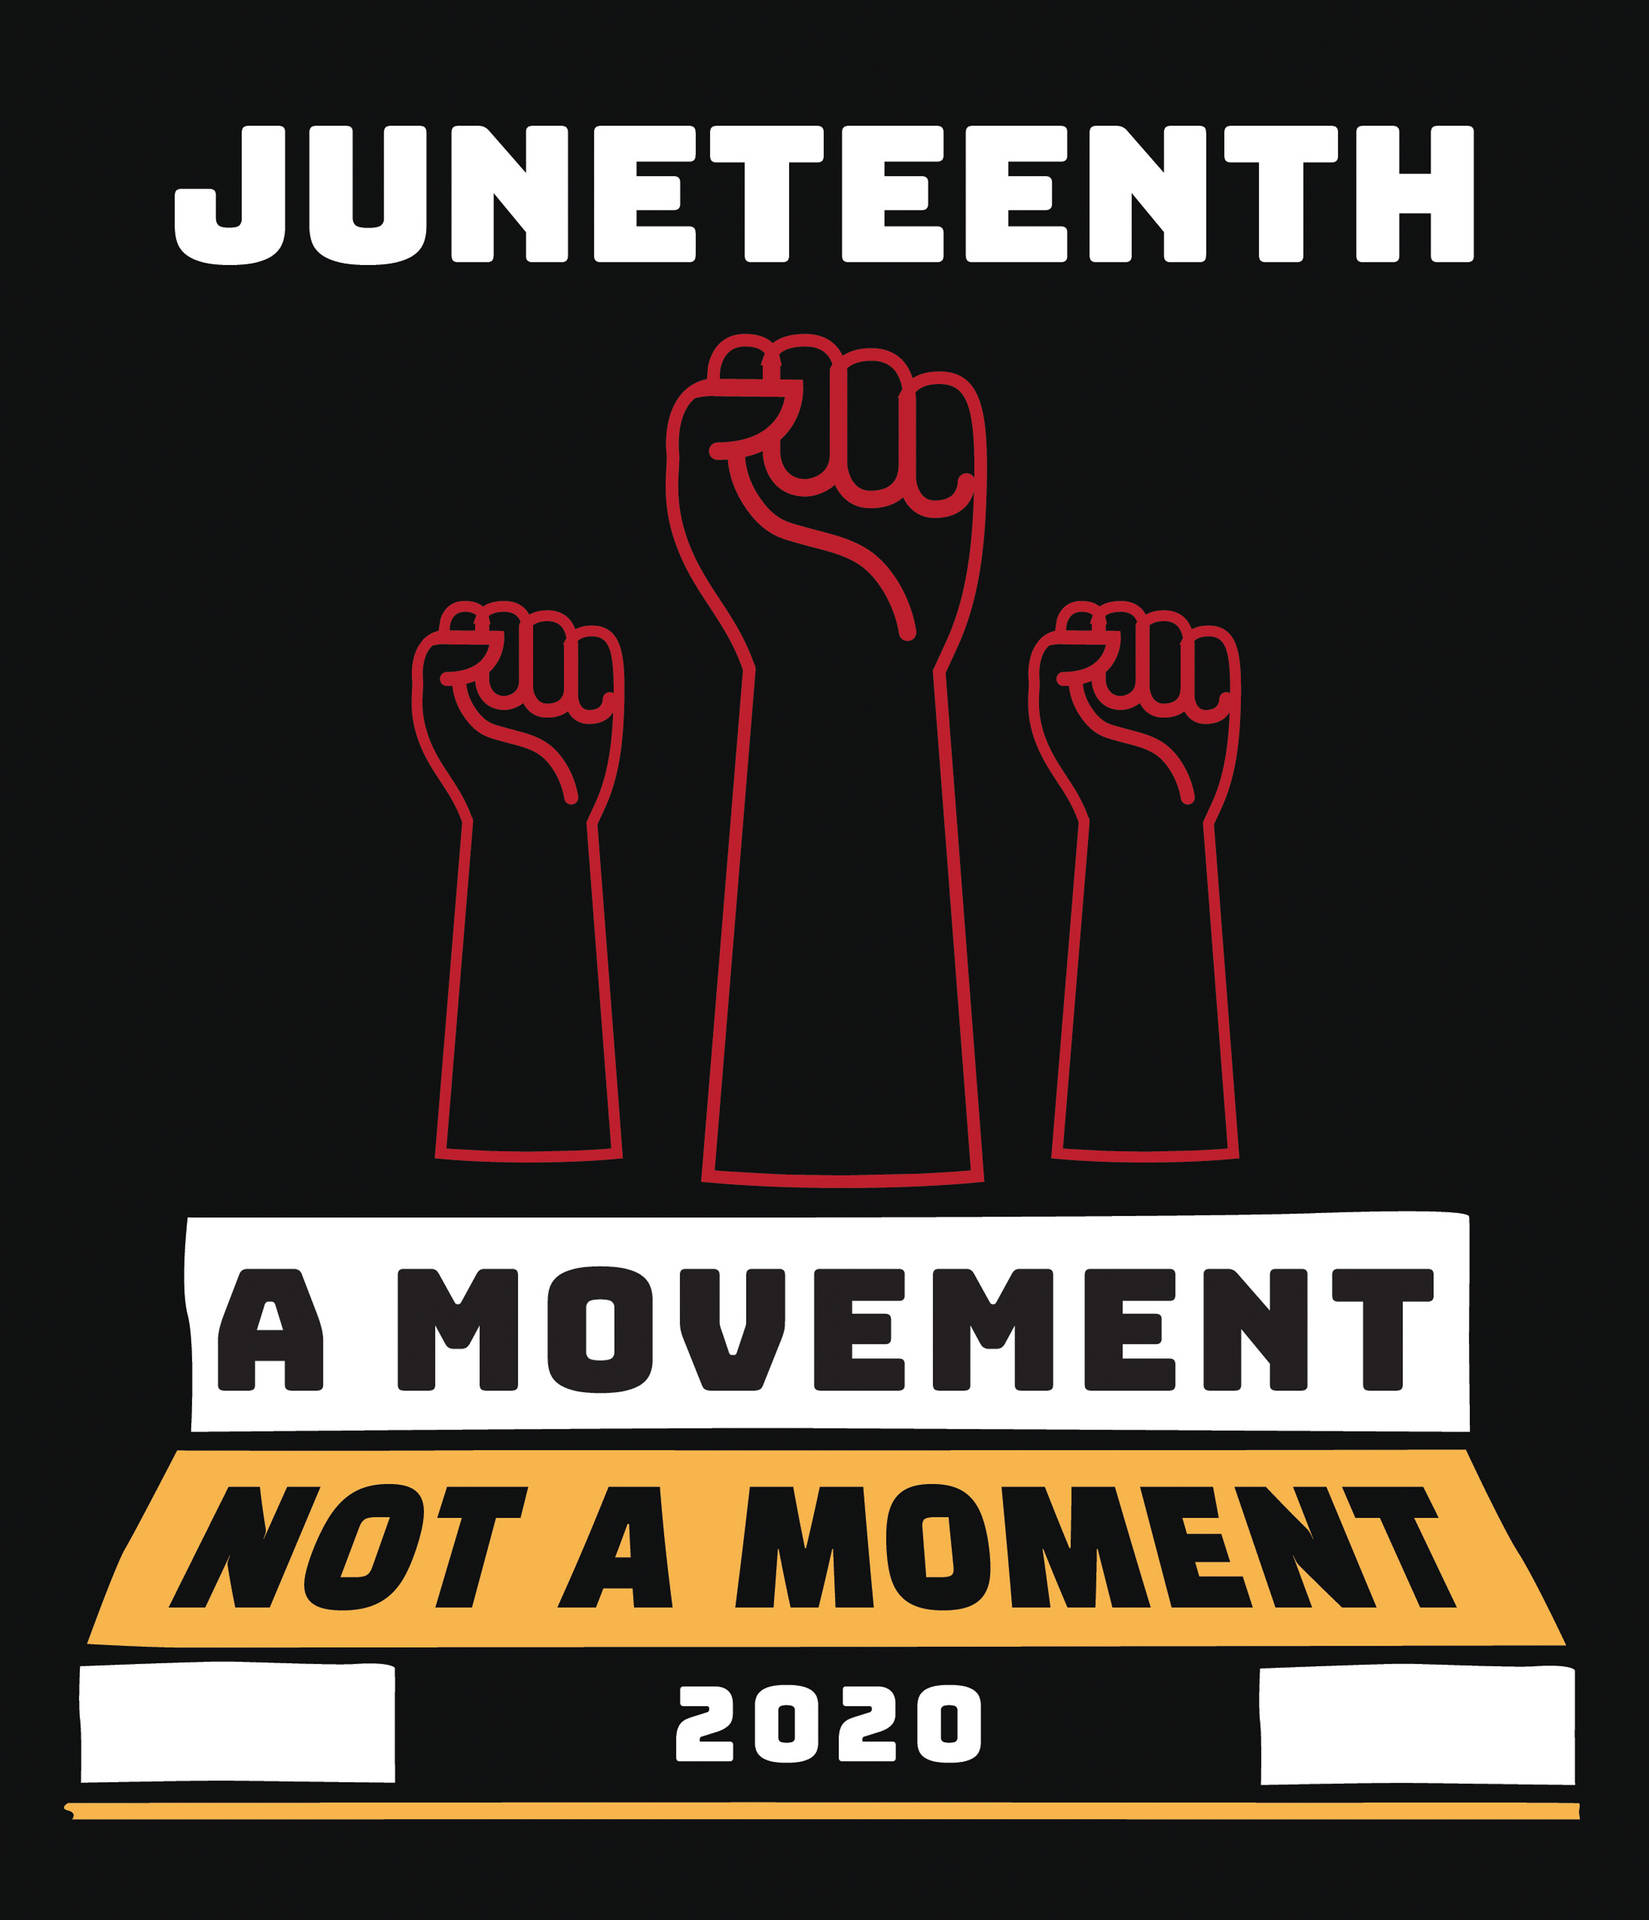 Juneteenth Movement Poster Background